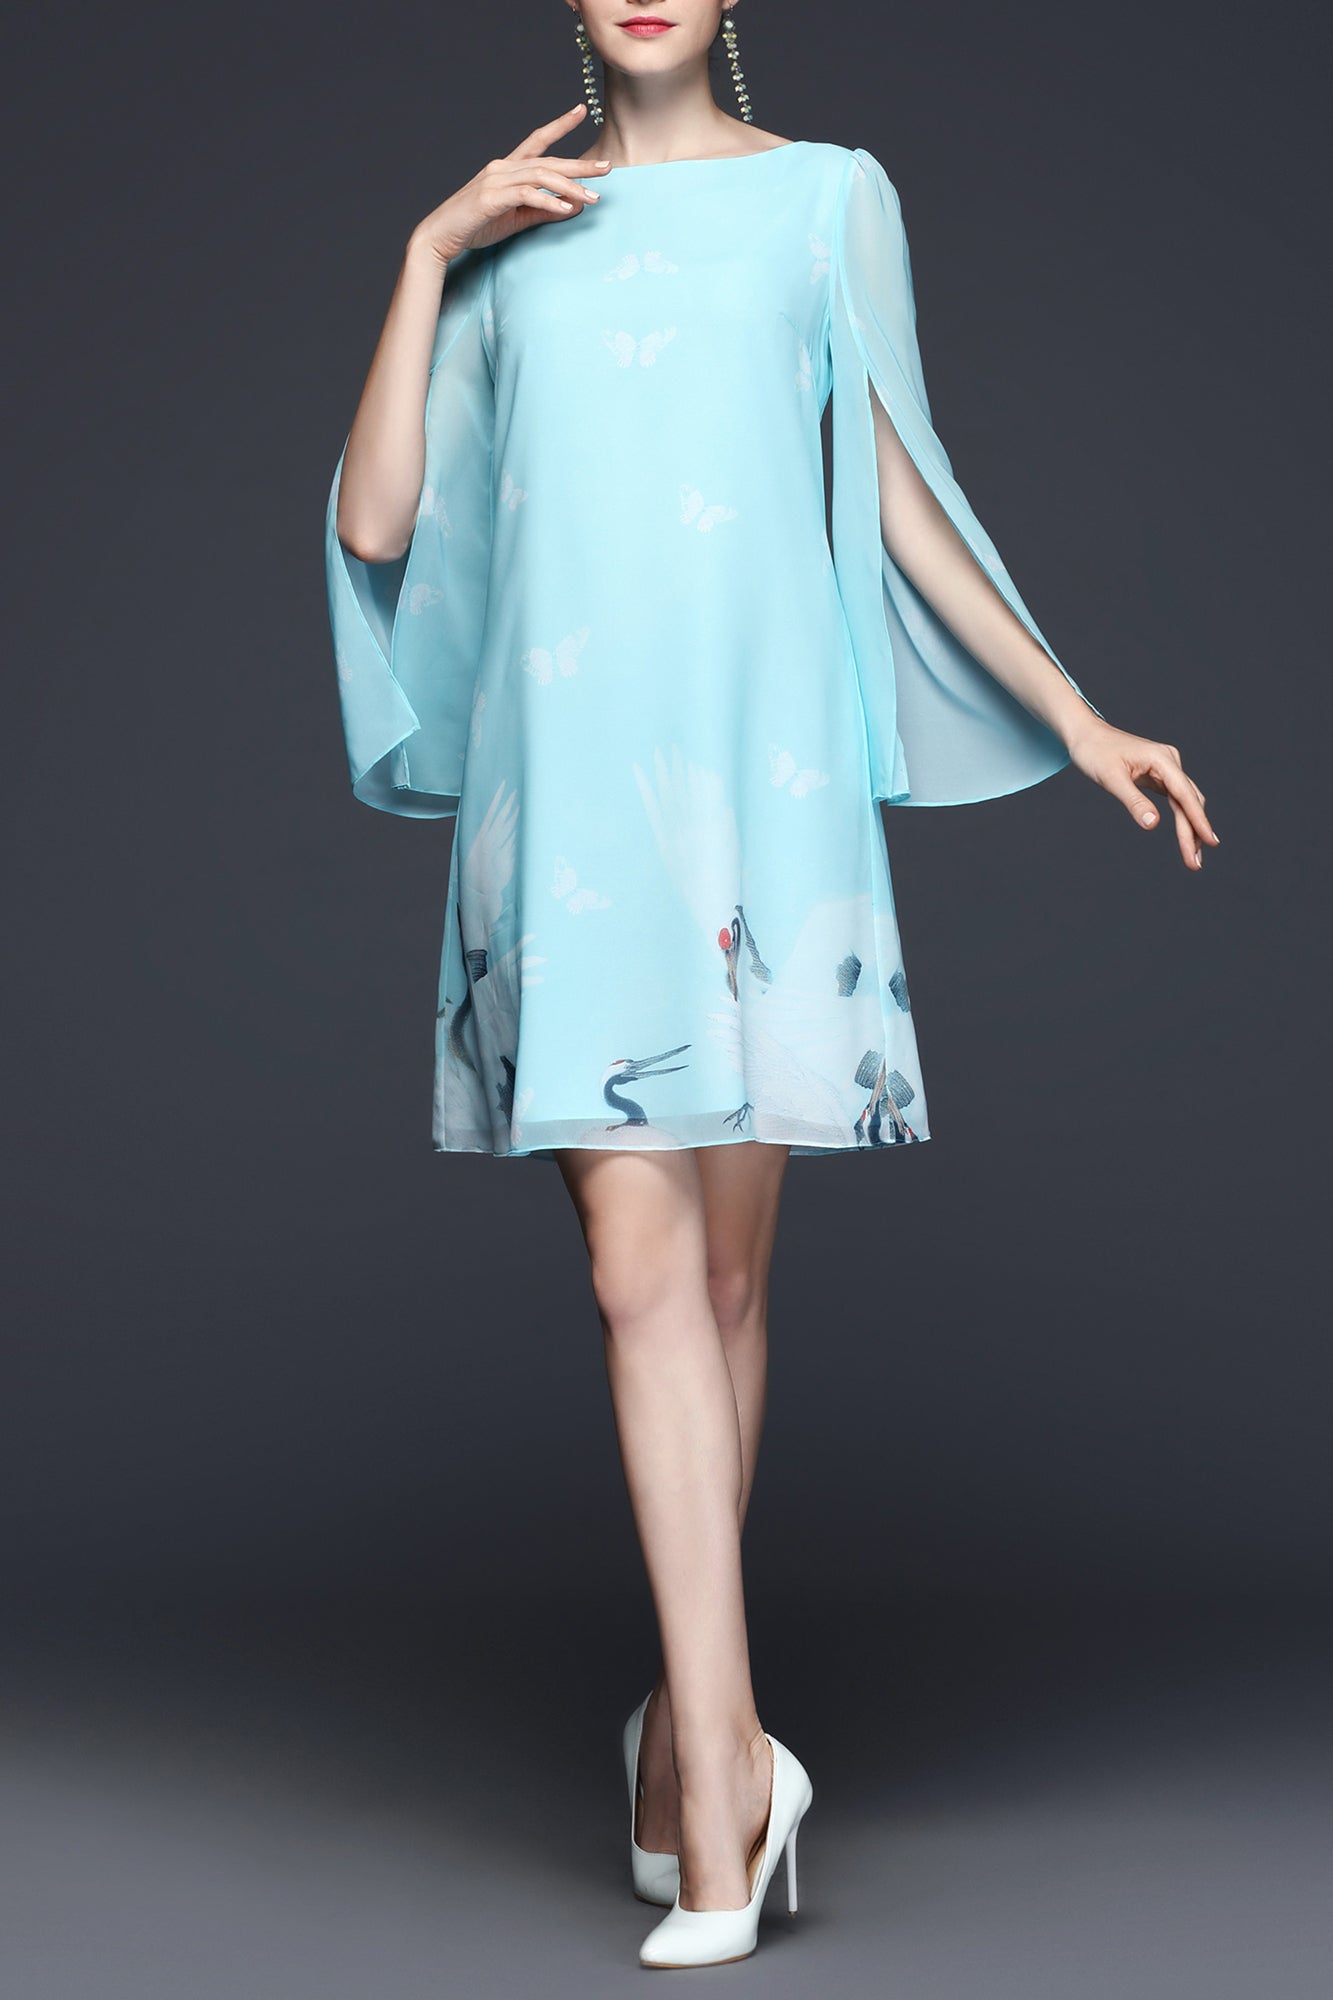 Tiffany  Red-crowned Crane Split Long Sleeves Summer Dress